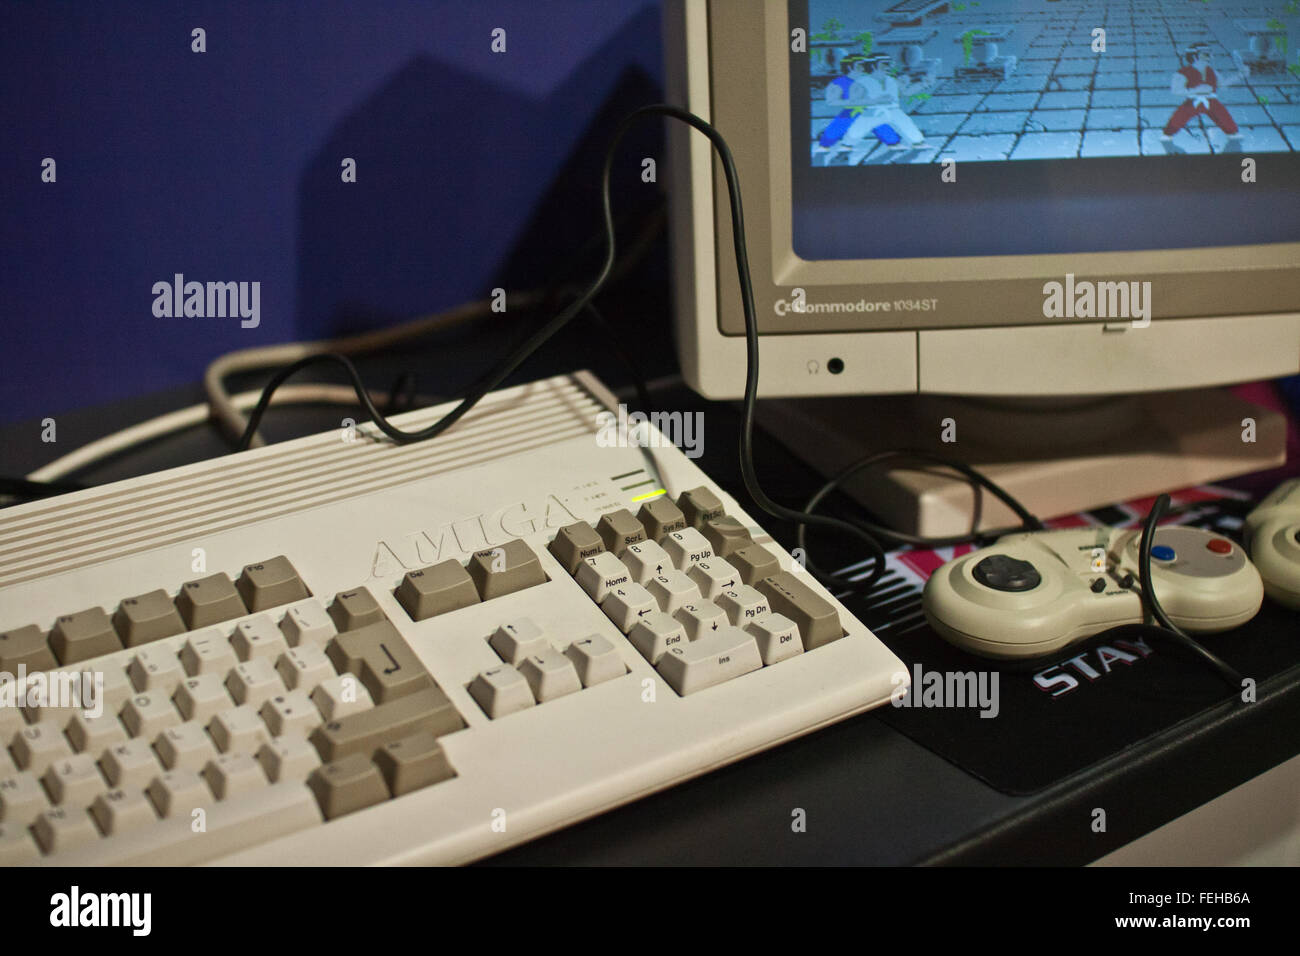 Amiga computer on display at Eurogamer expo. Stock Photo